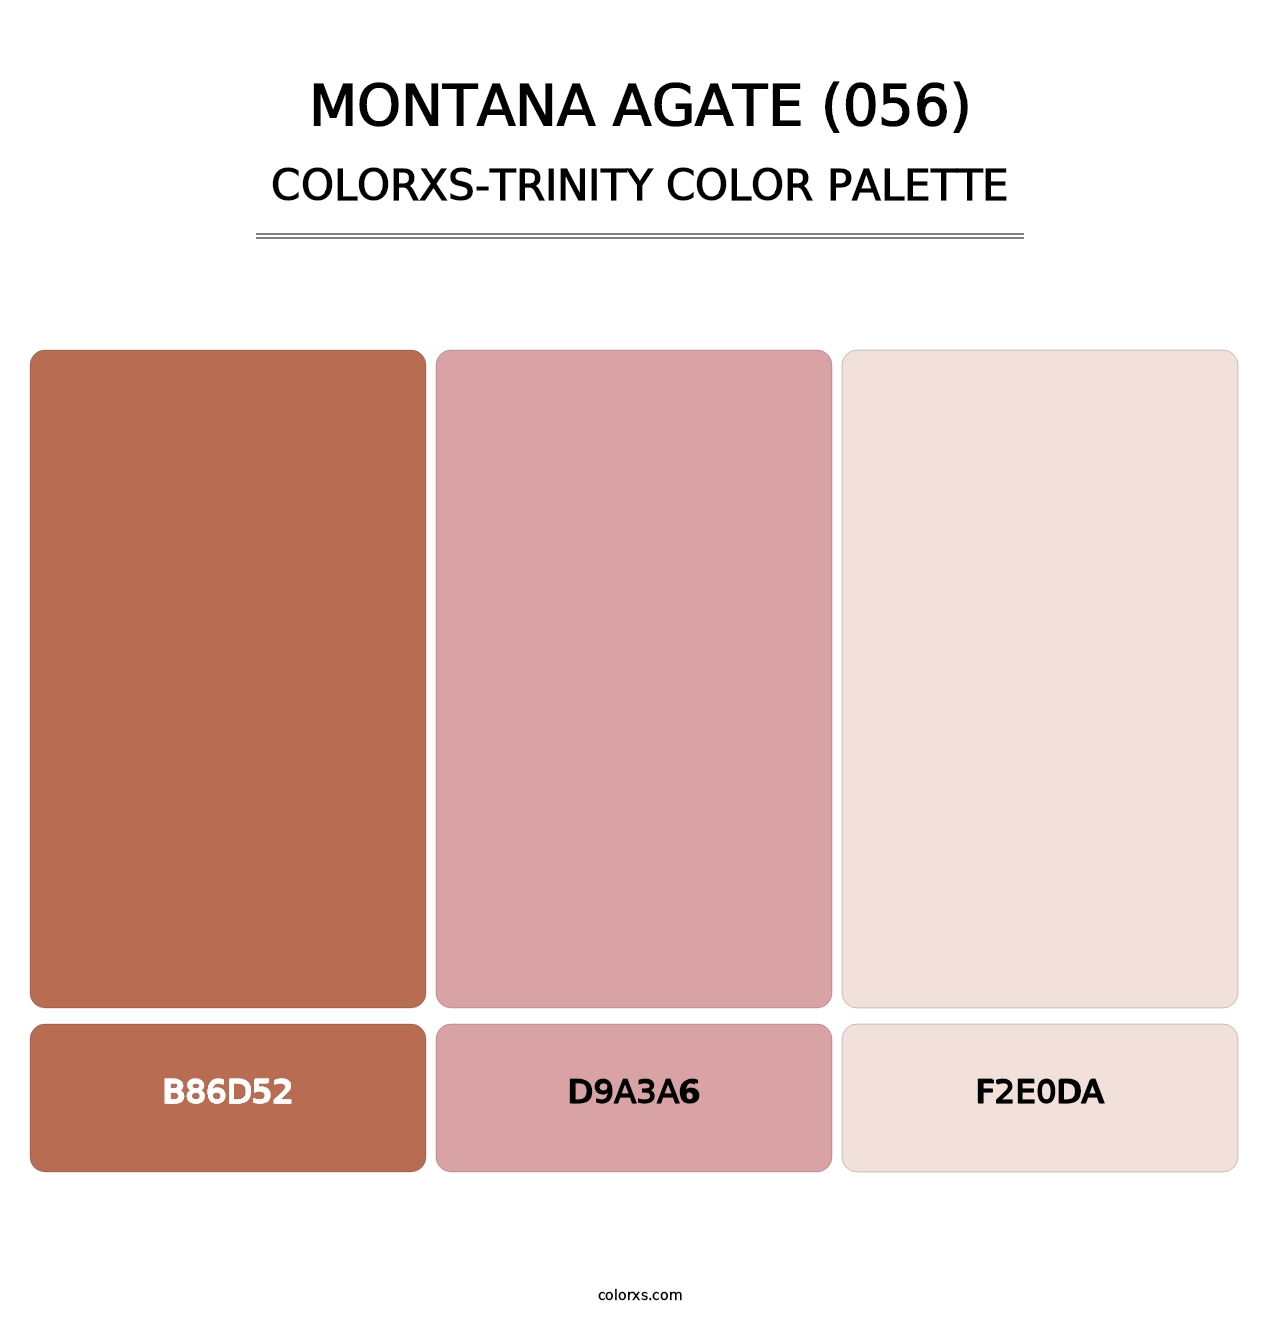 Montana Agate (056) - Colorxs Trinity Palette